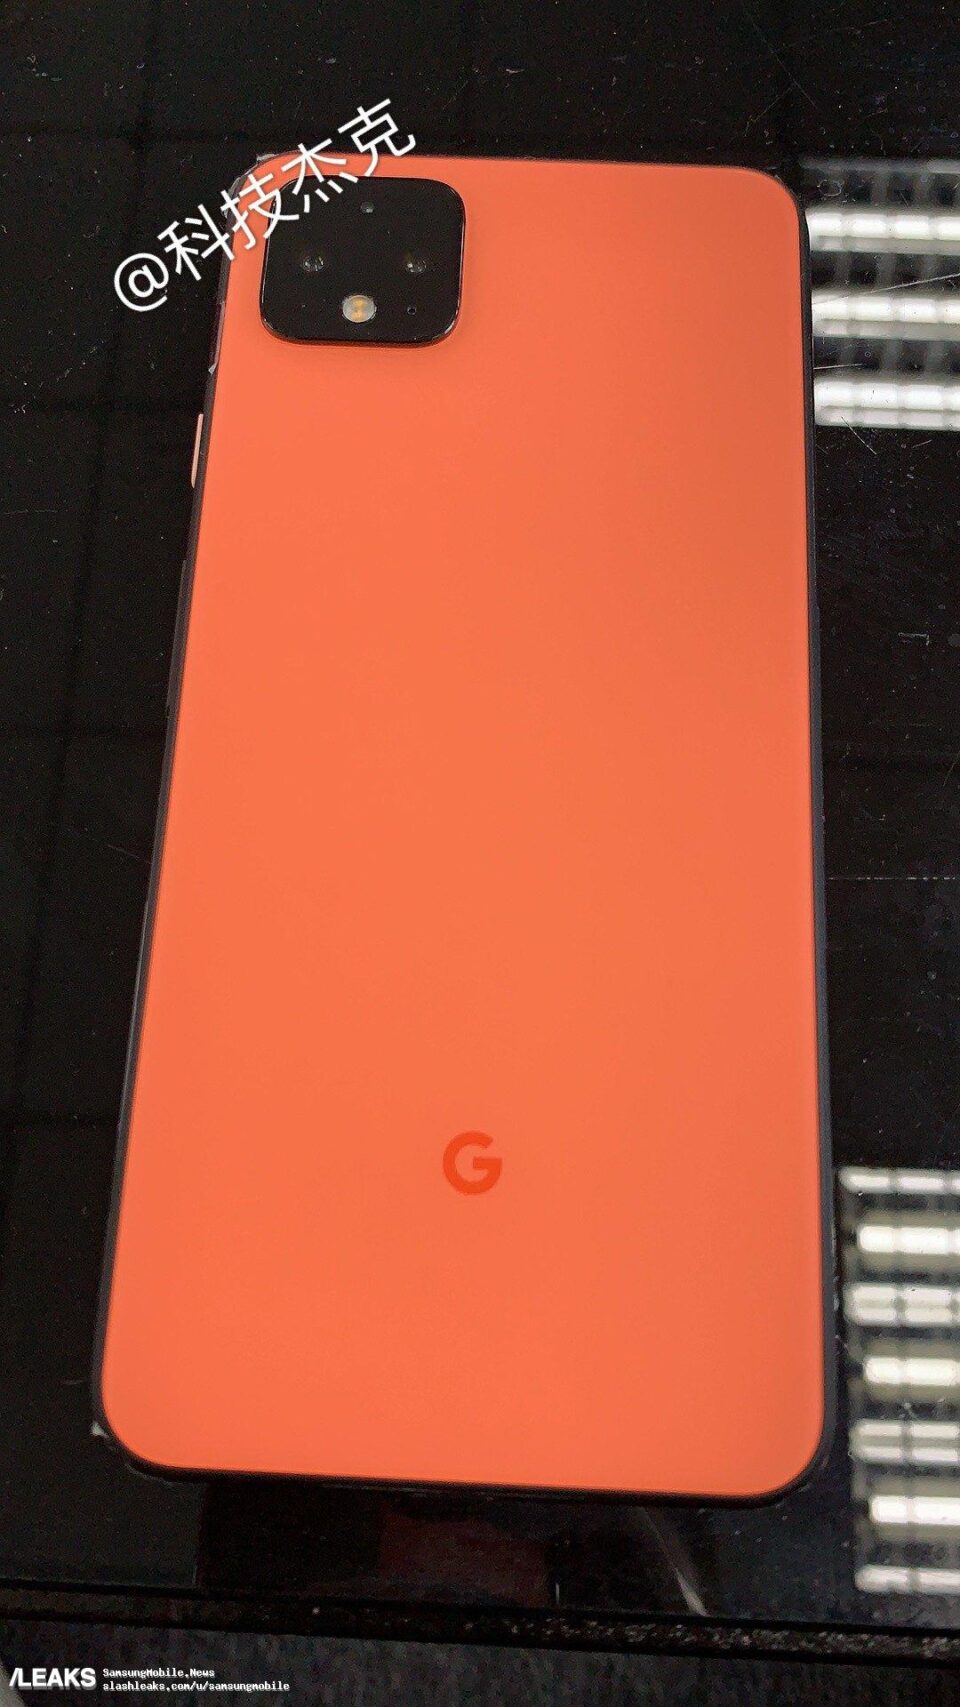 Google Pixel 4 orange